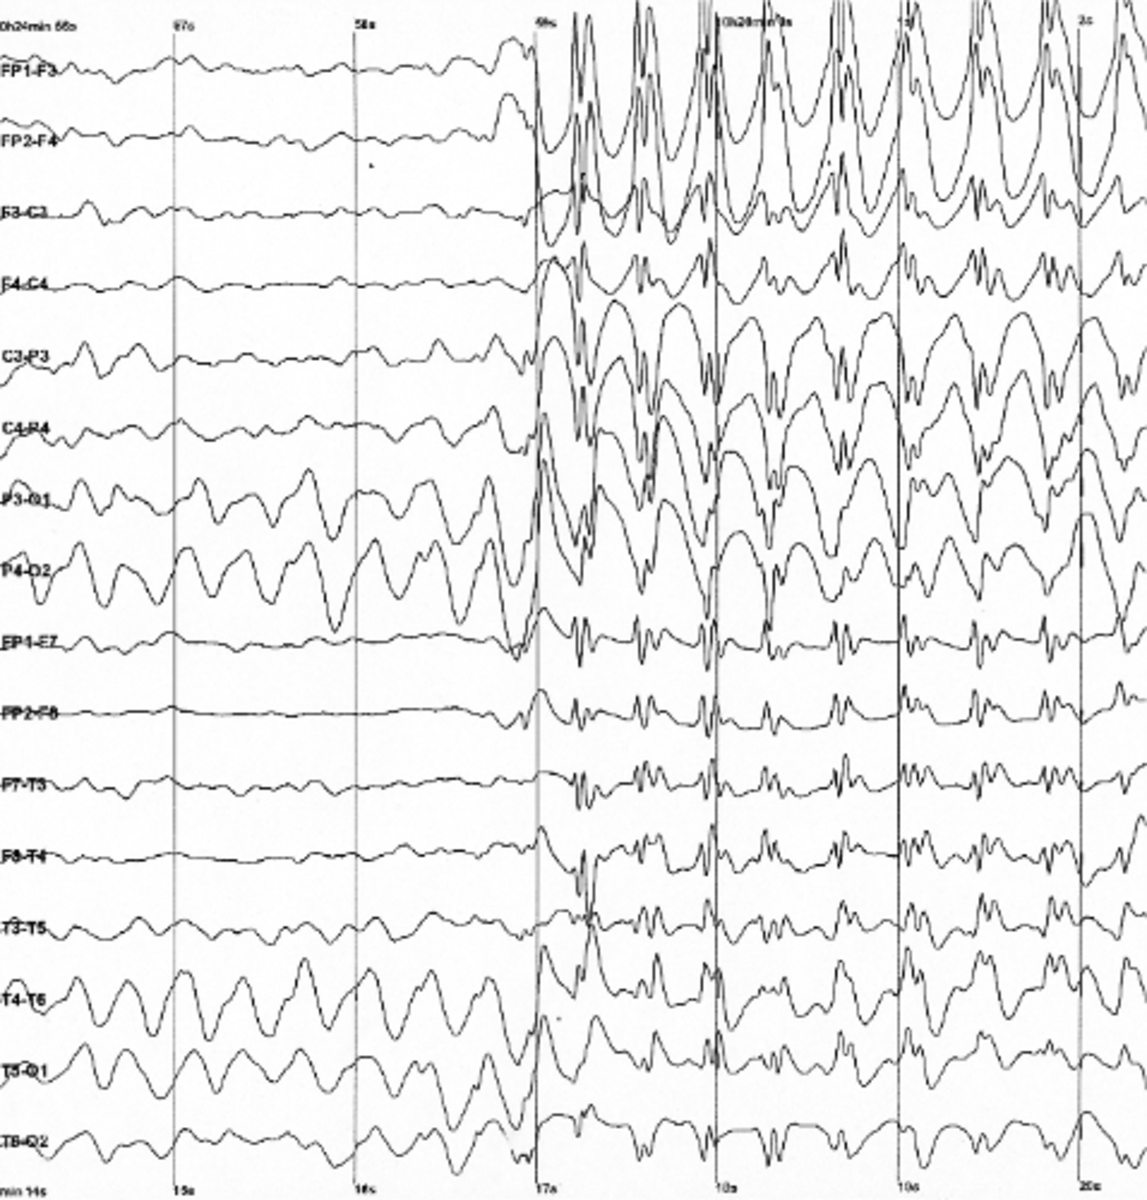 Brain Waves With A Seizure